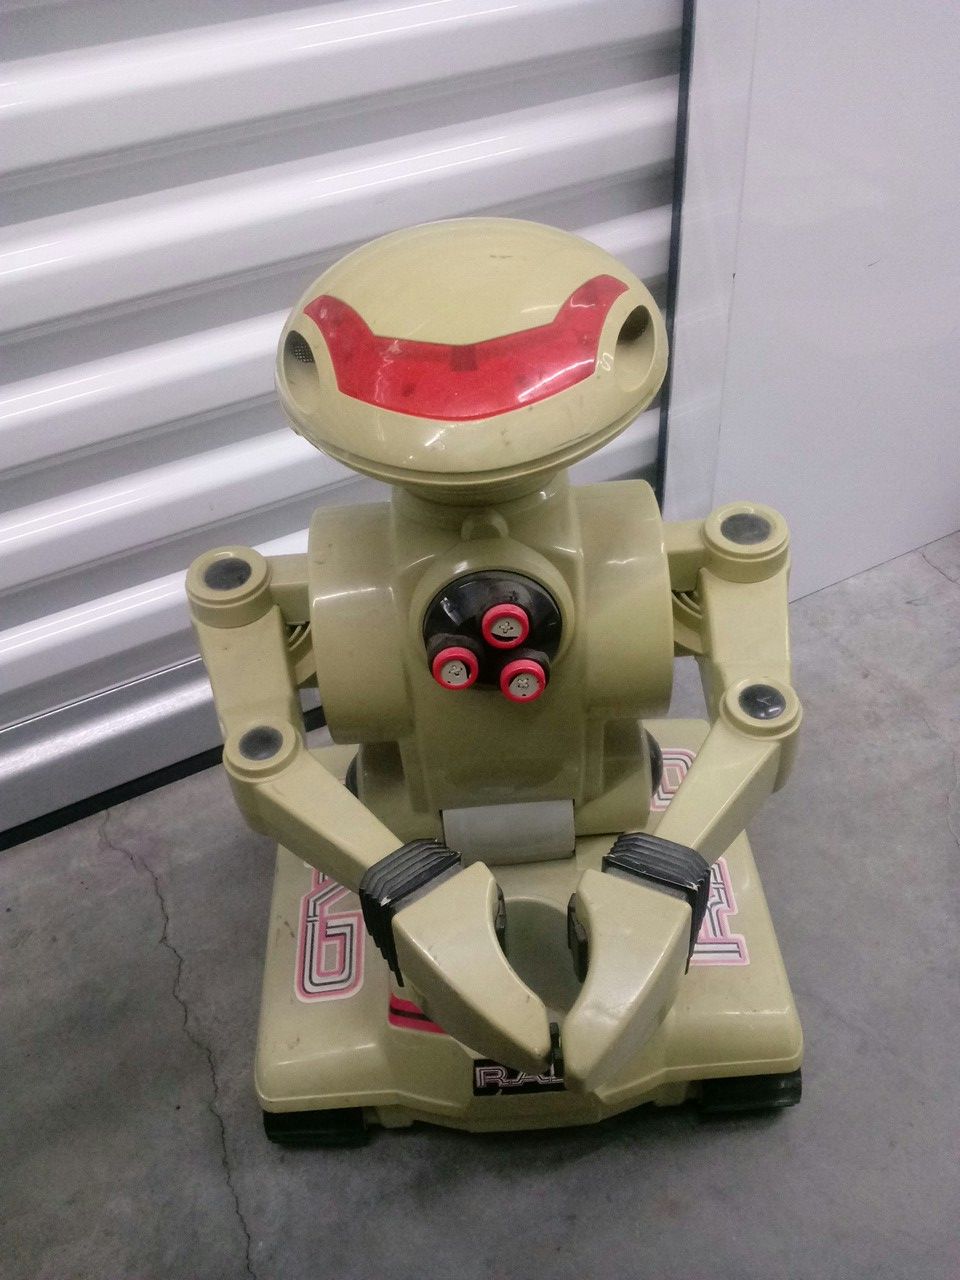 RAD robot vintage toy collectible